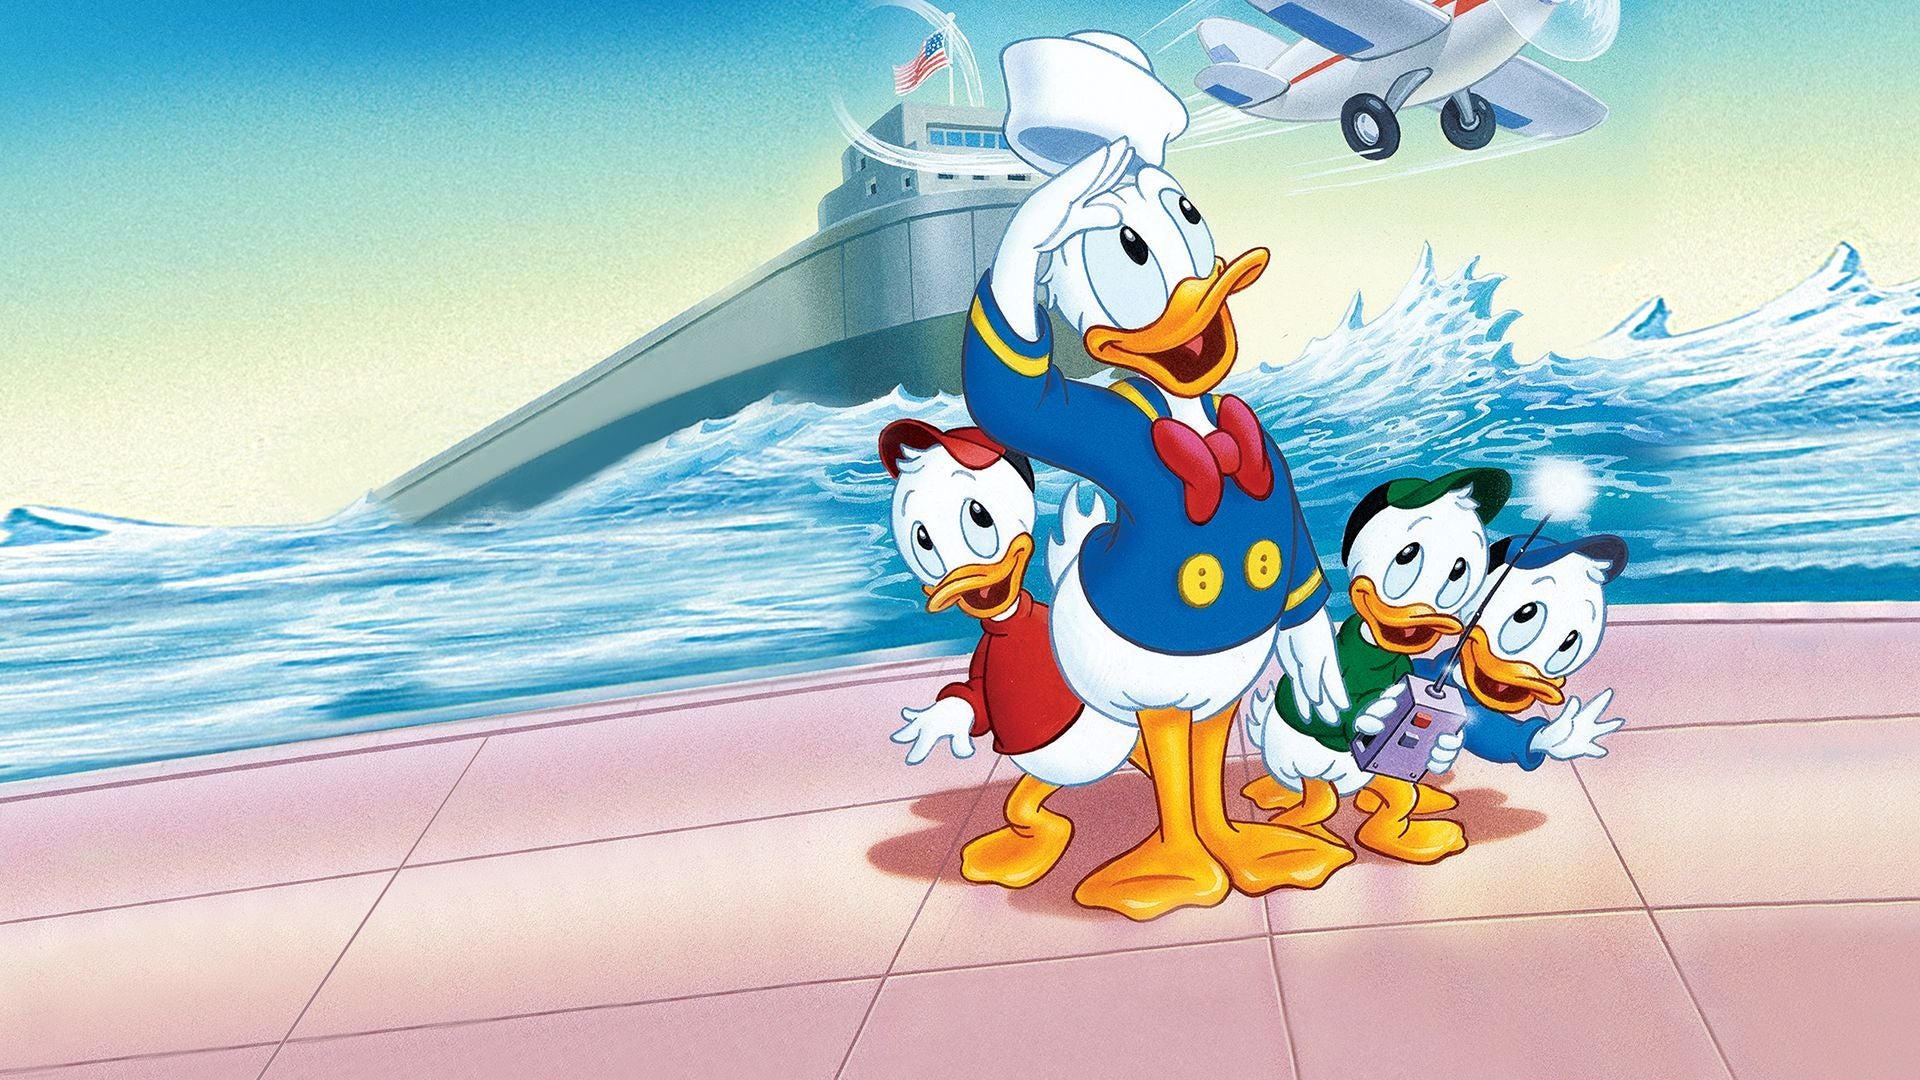 Disney's DuckTales: The Complete Series